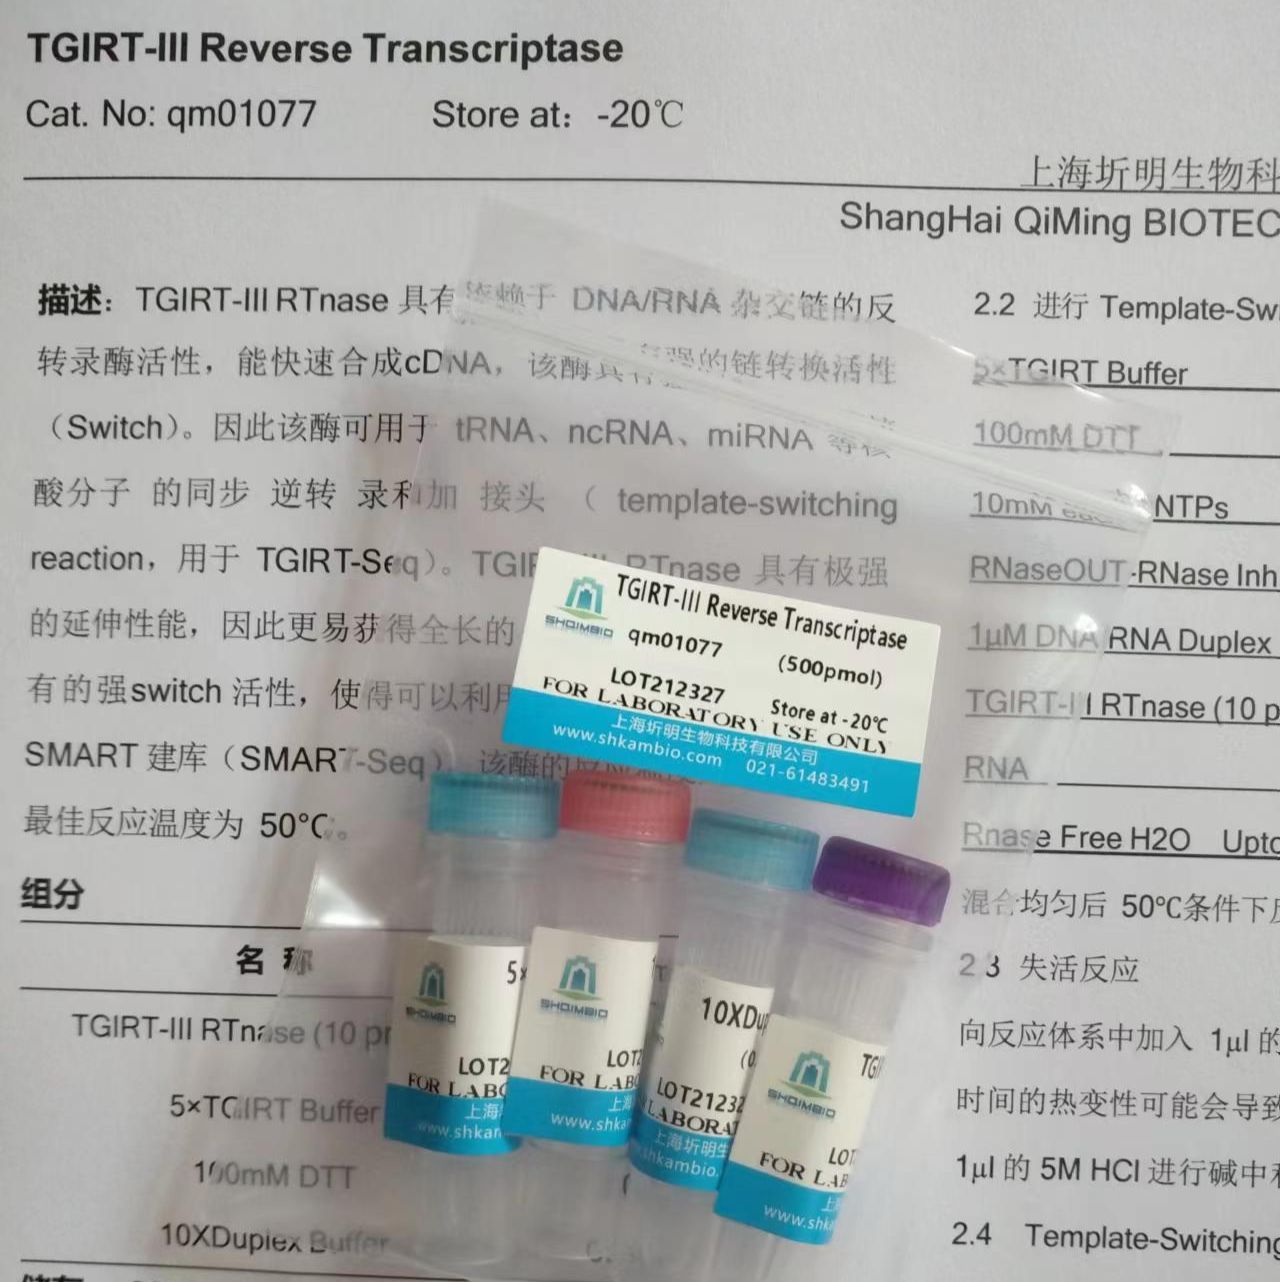 TGIRT-III Reverse Transcriptase